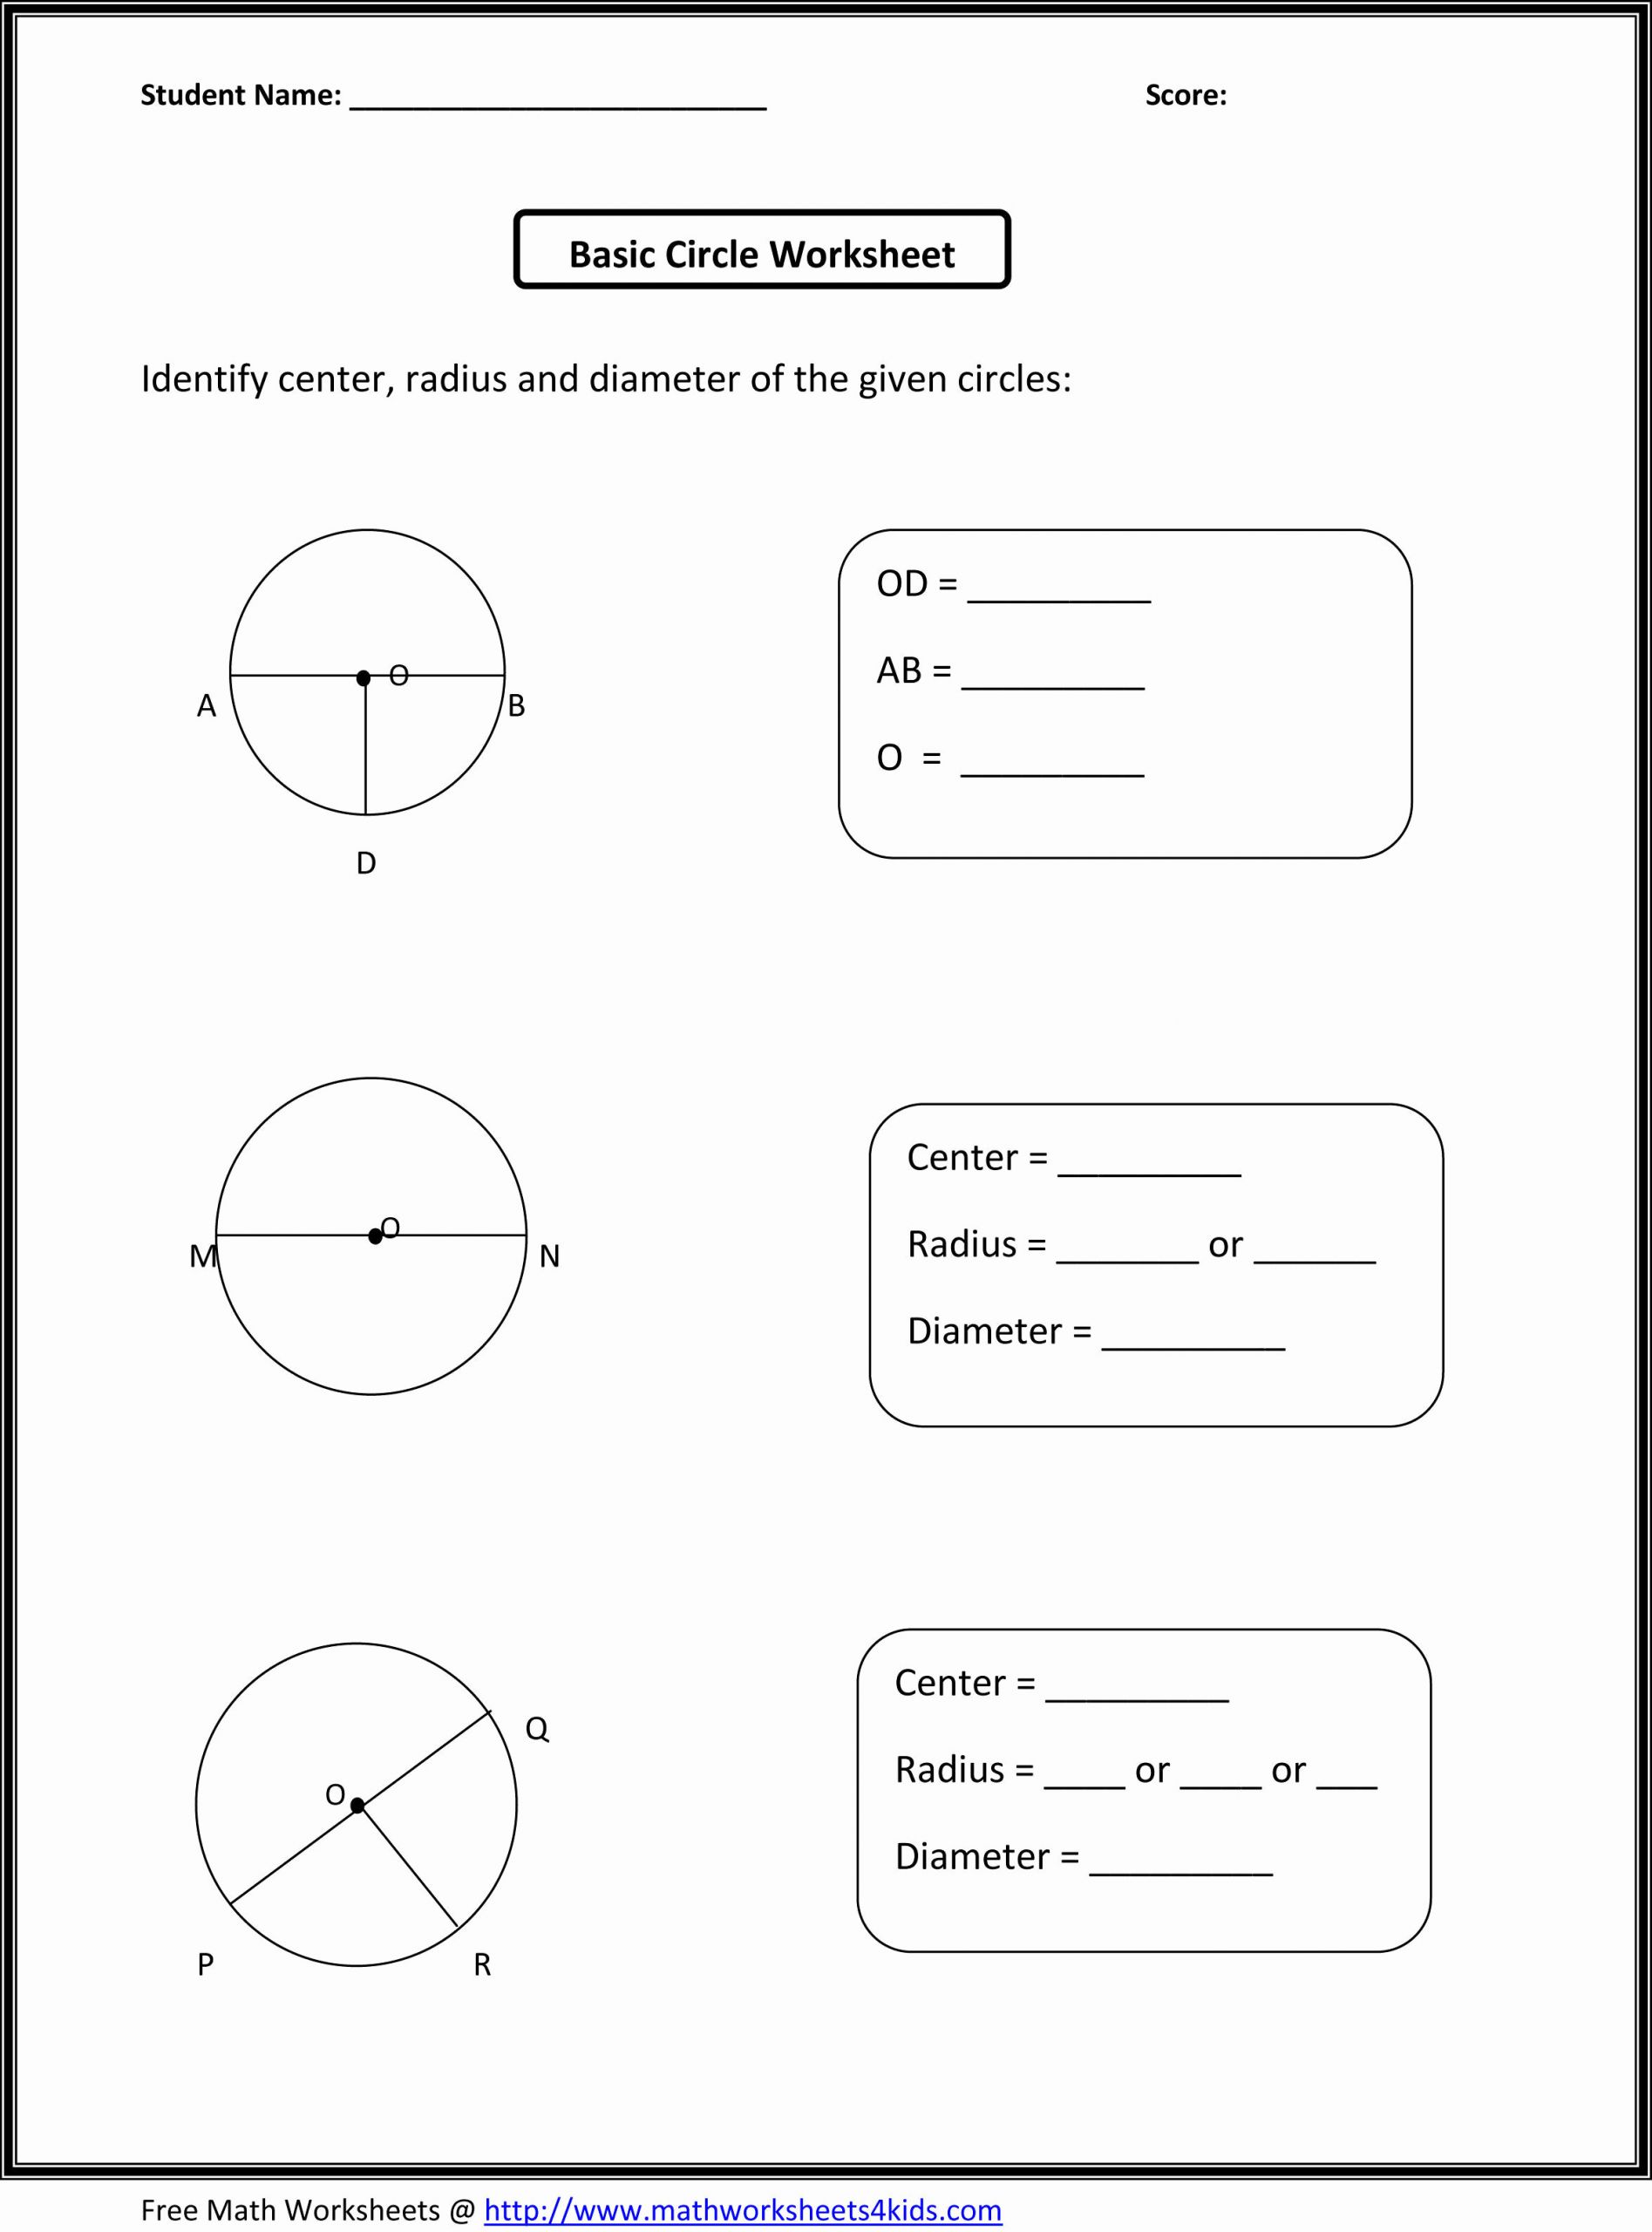 Free Math Worksheets Third Grade 3 Measurement Metric Units Capacity L Ml